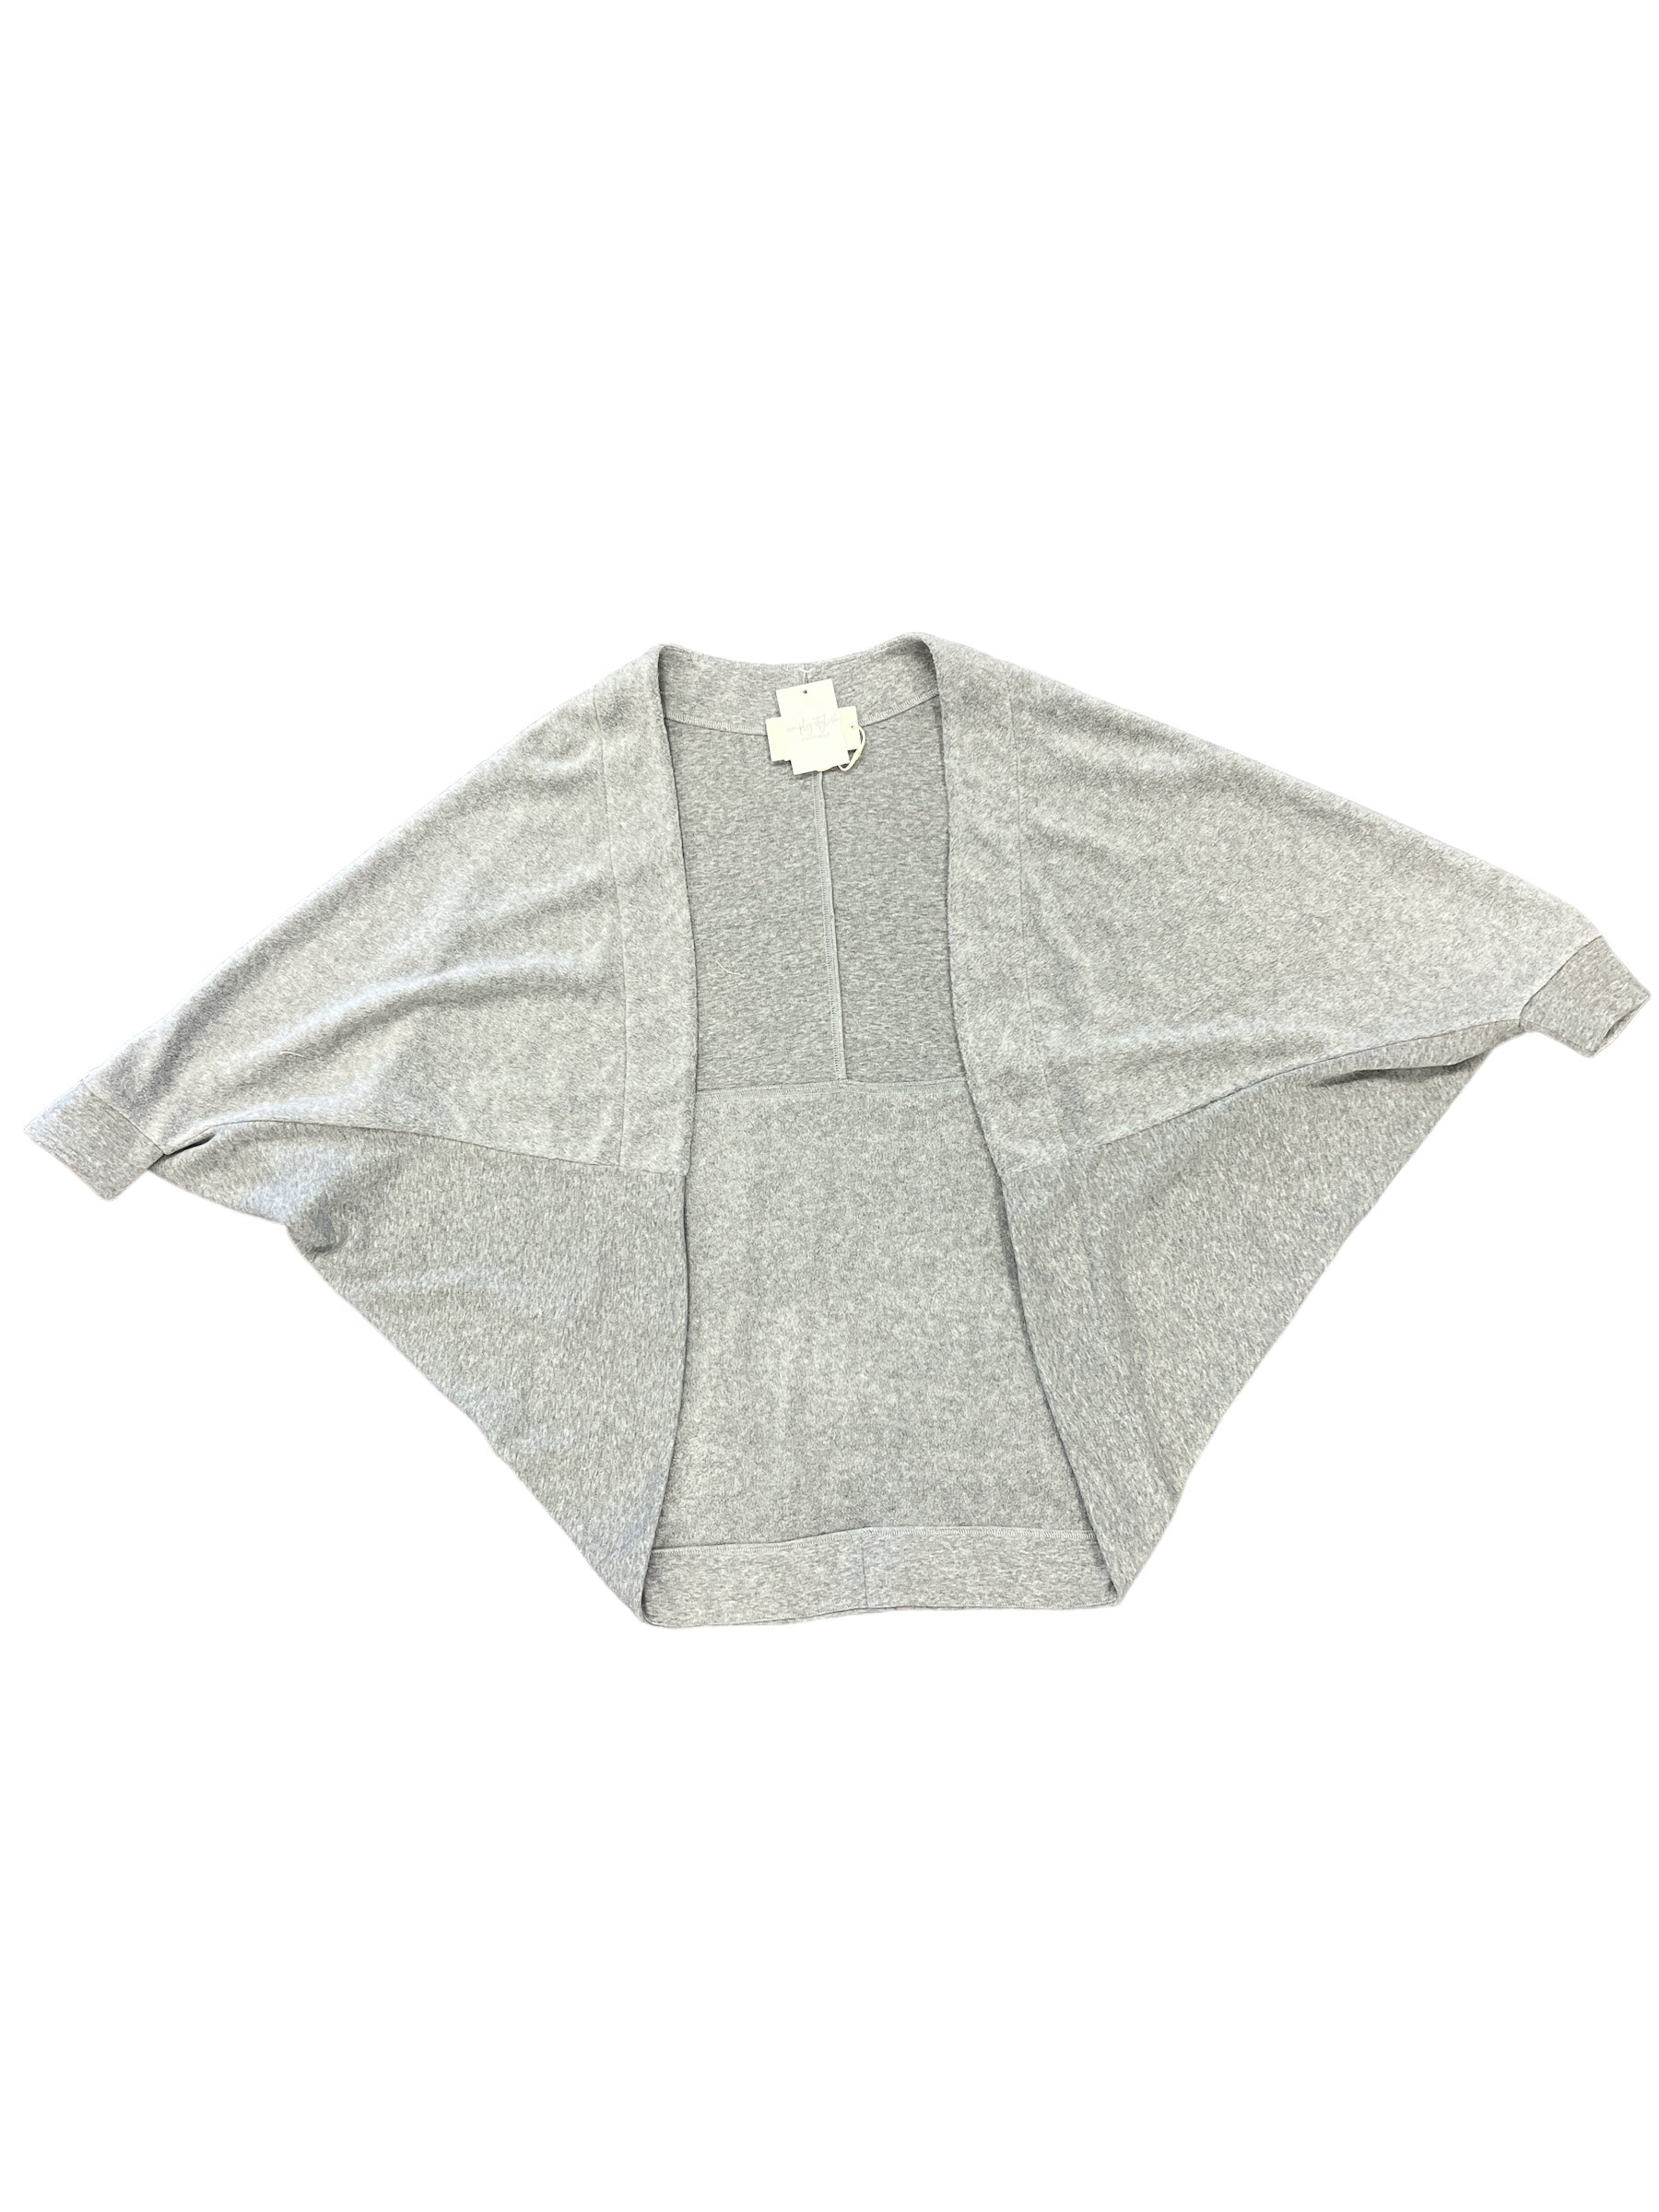 Commuter Fleece Cardigan-140 Sweaters, Cardigans & Sweatshirts-Simply Stylish Boutique-Simply Stylish Boutique | Women’s & Kid’s Fashion | Paducah, KY